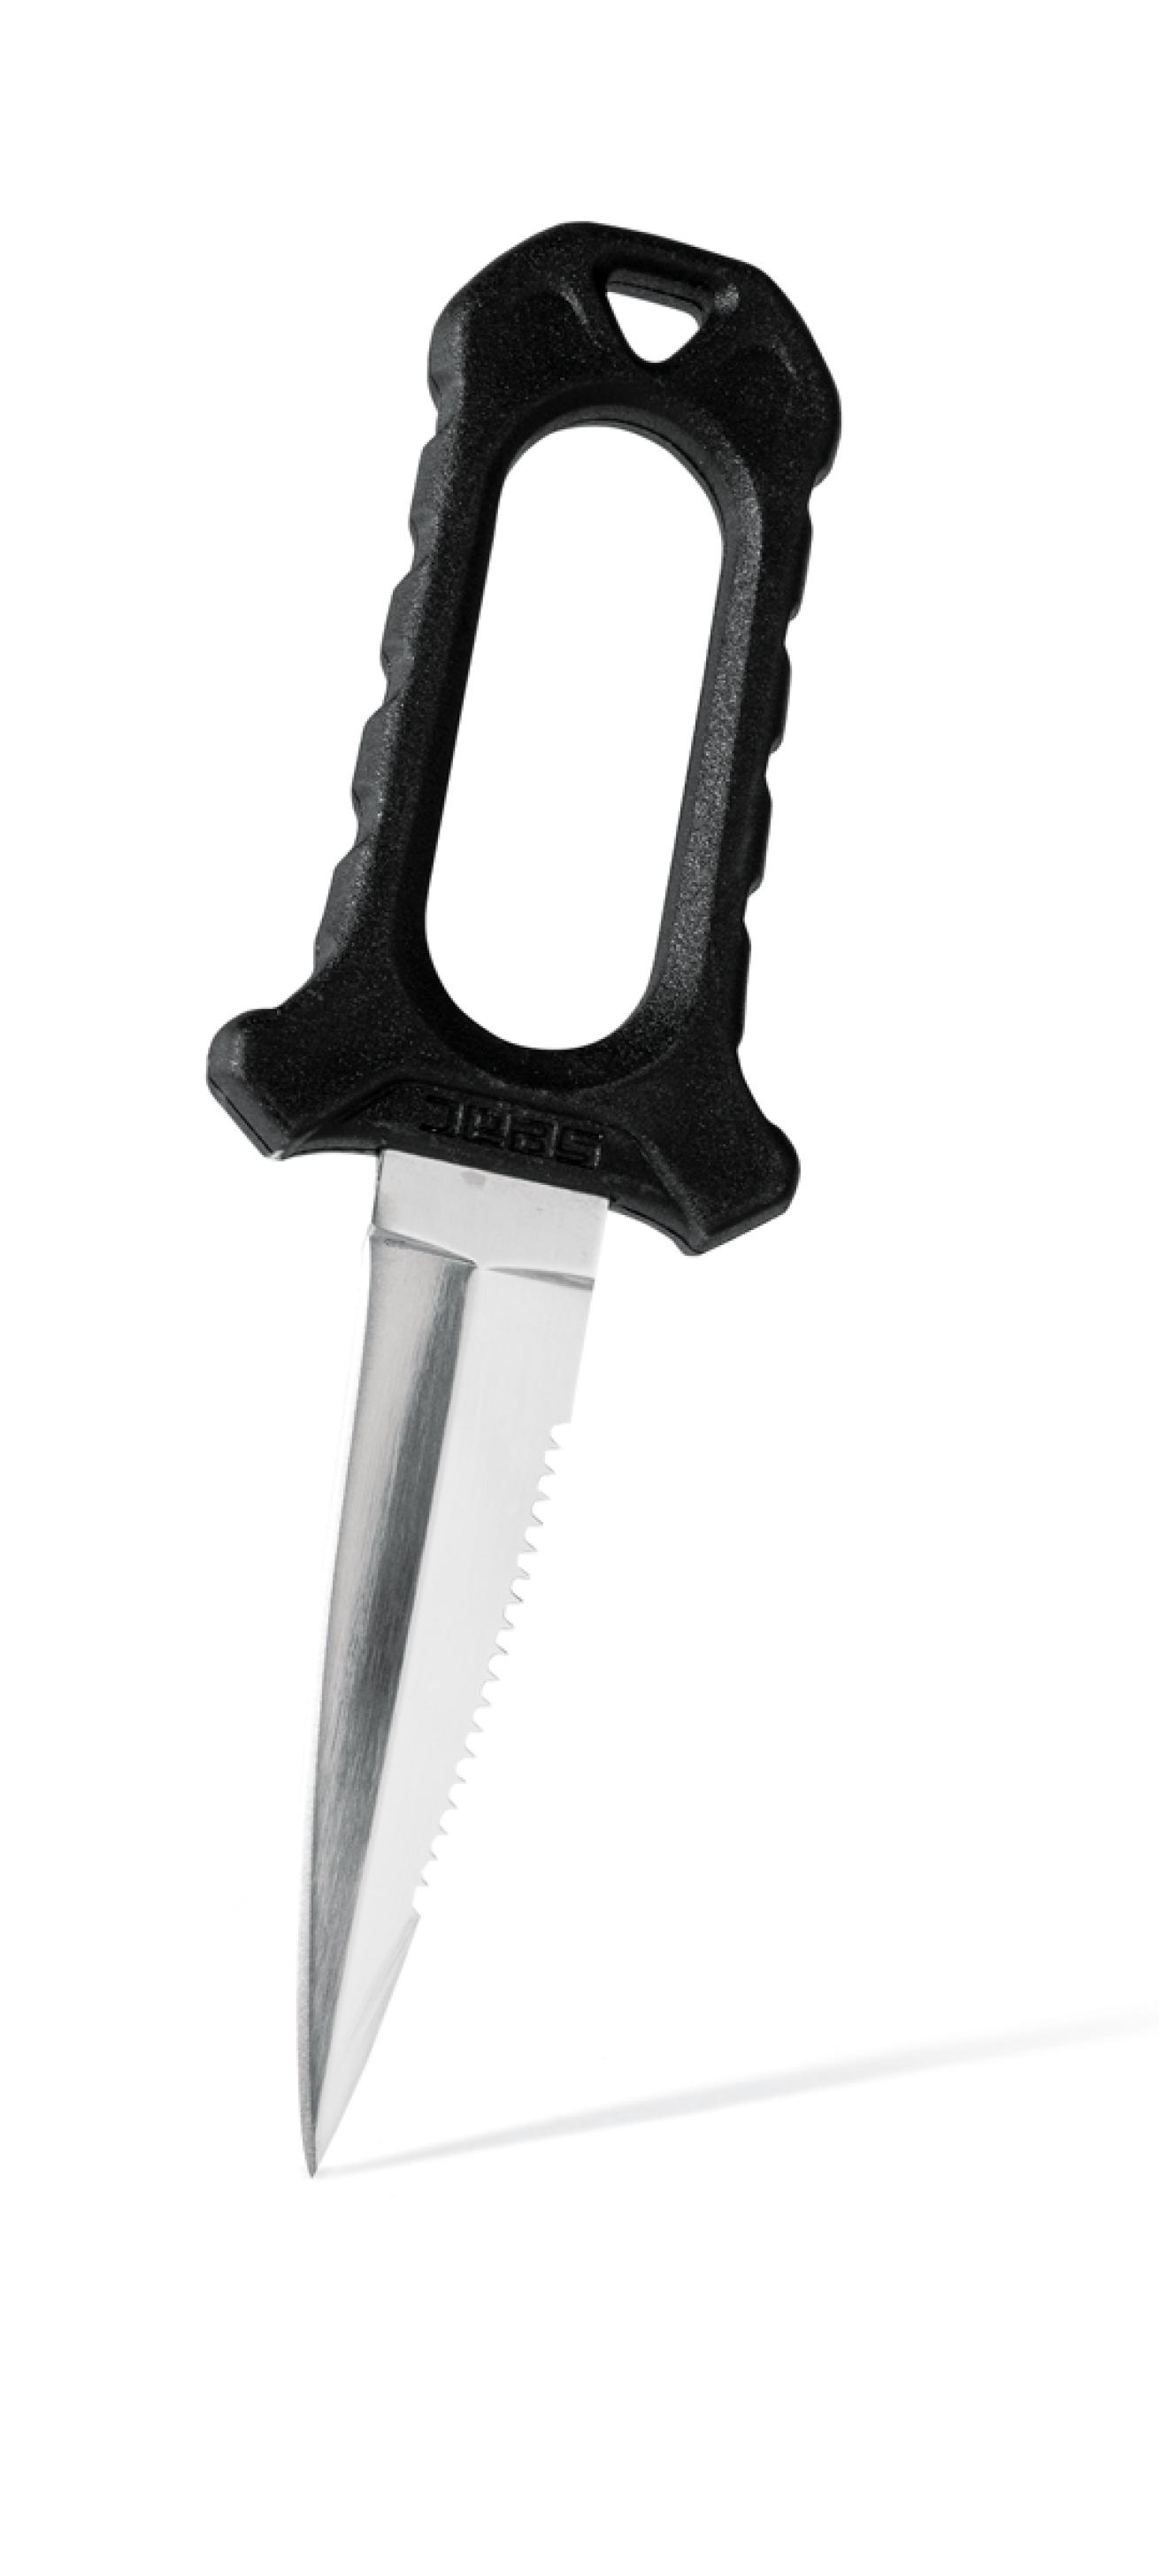 Buy Seac Titanium Knife at Affordable Price